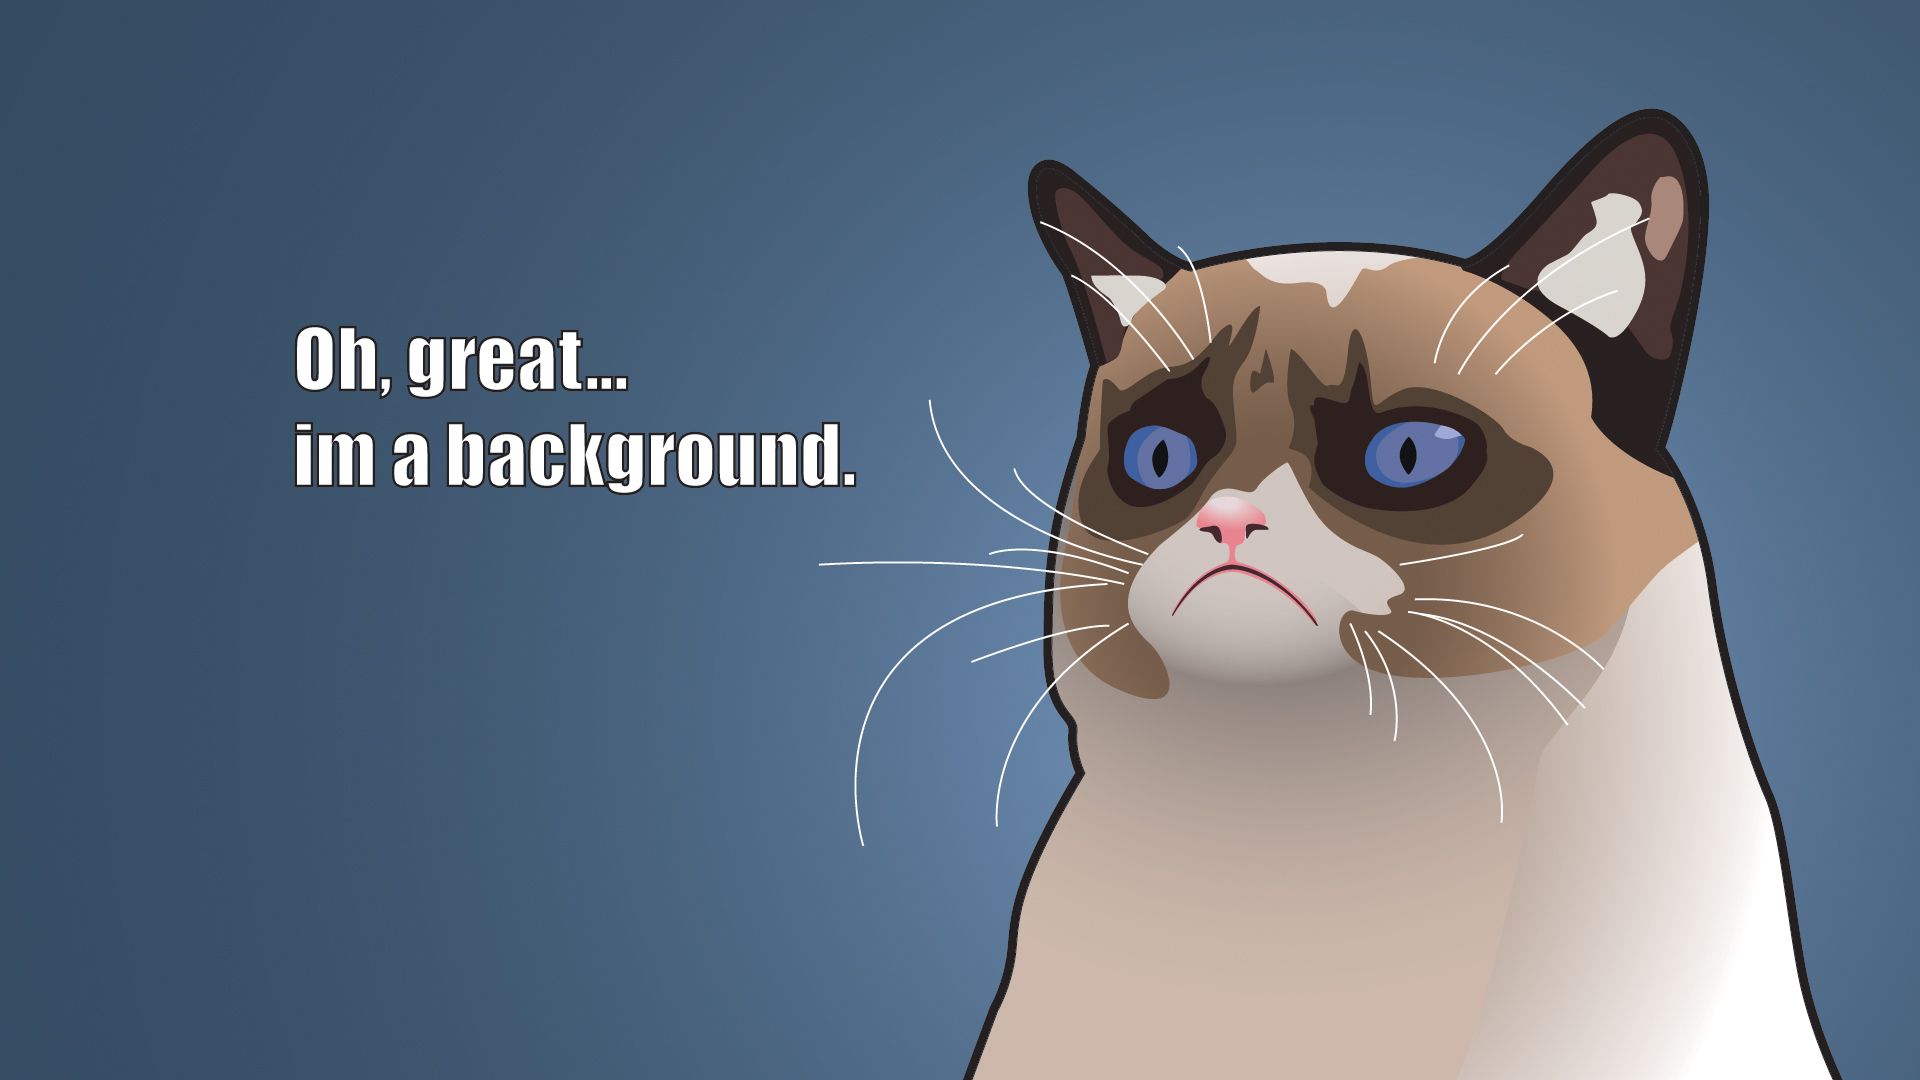 Grumpy Cat Wallpaper. Grumpy Cat wallpaper. Grumpy cat meme, Grumpy cat cartoon, Cat background